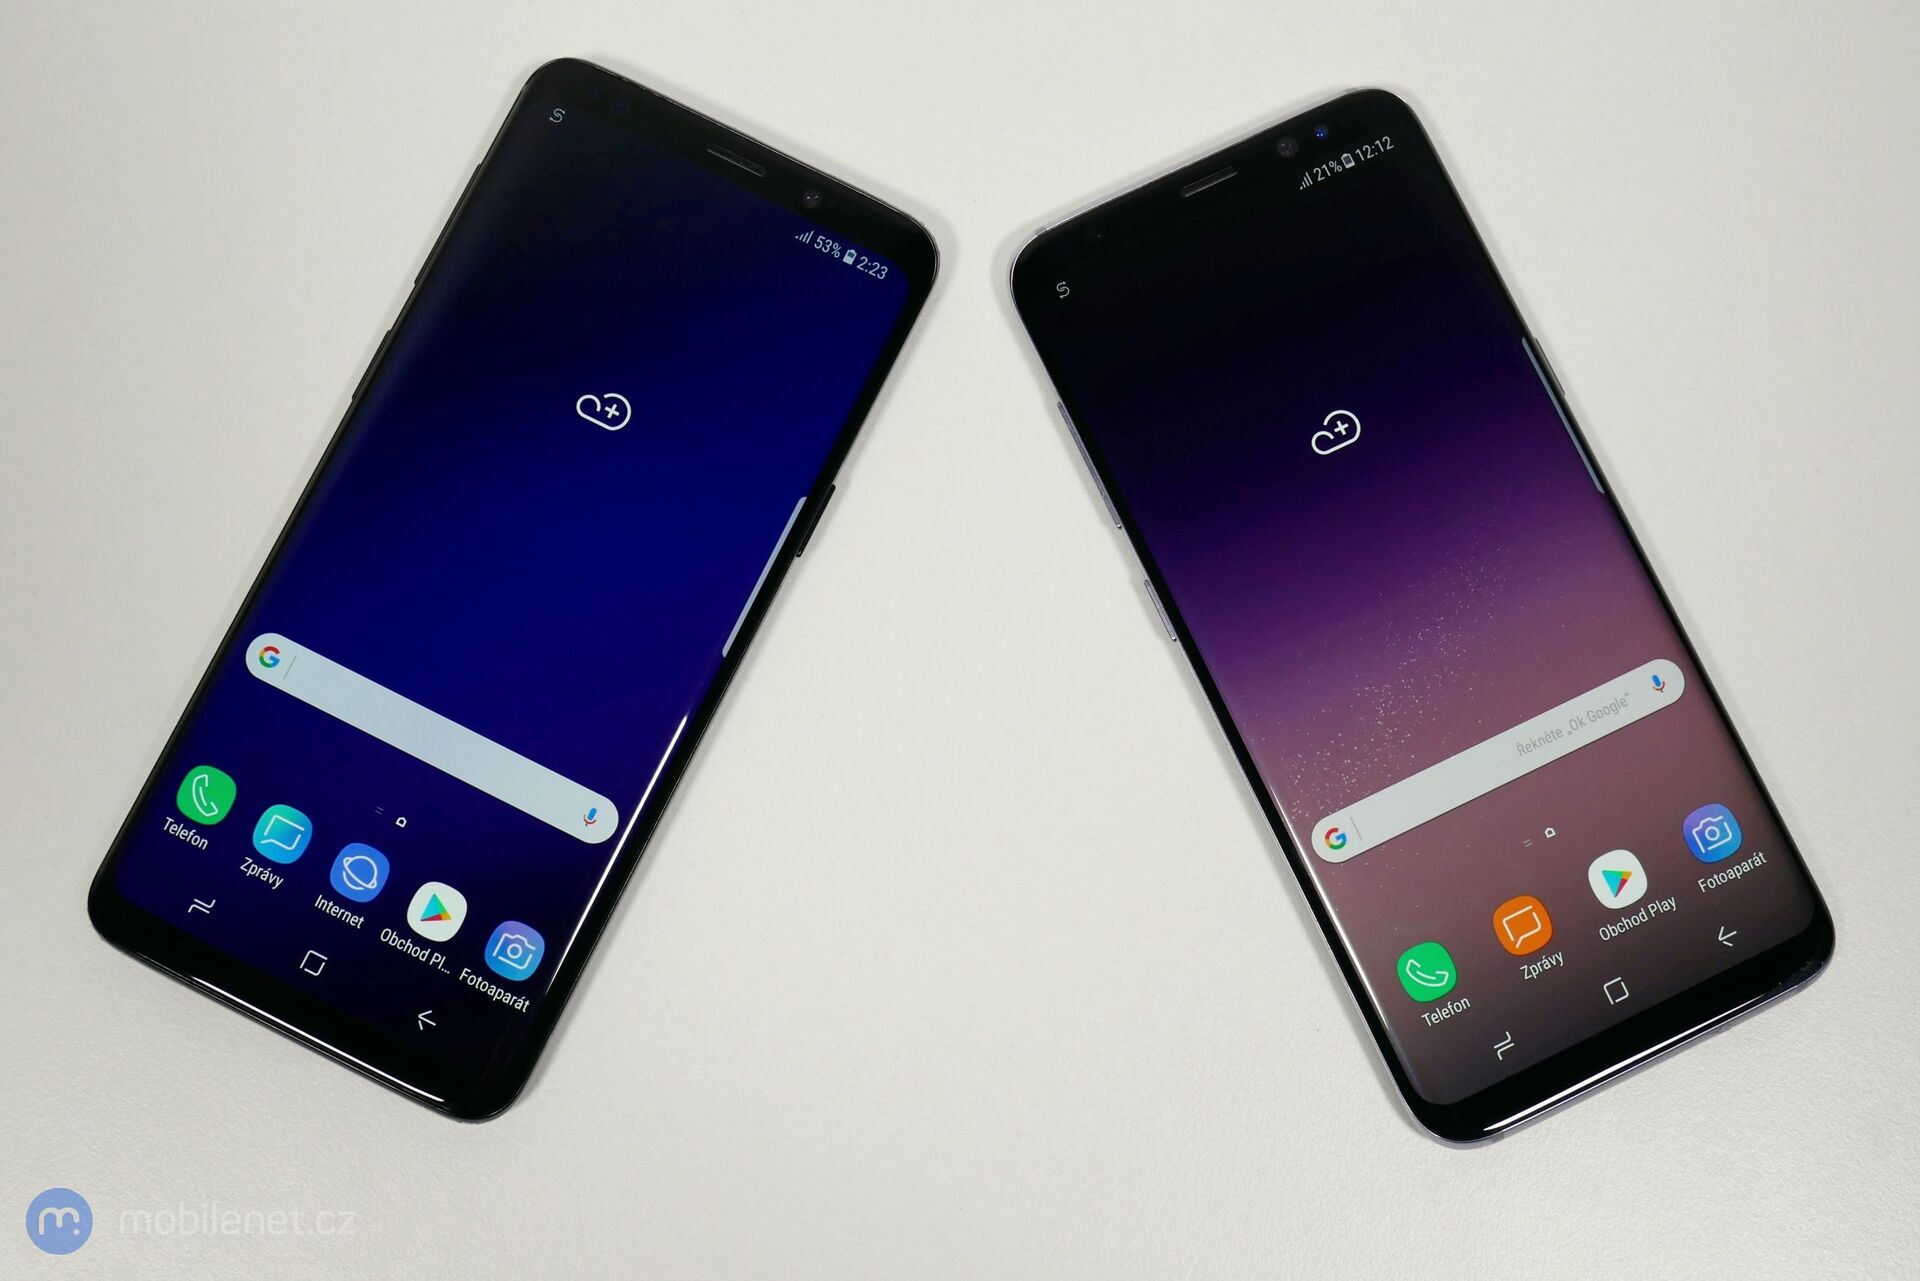 Samsung Galaxy S9 a Samsung Galaxy S8